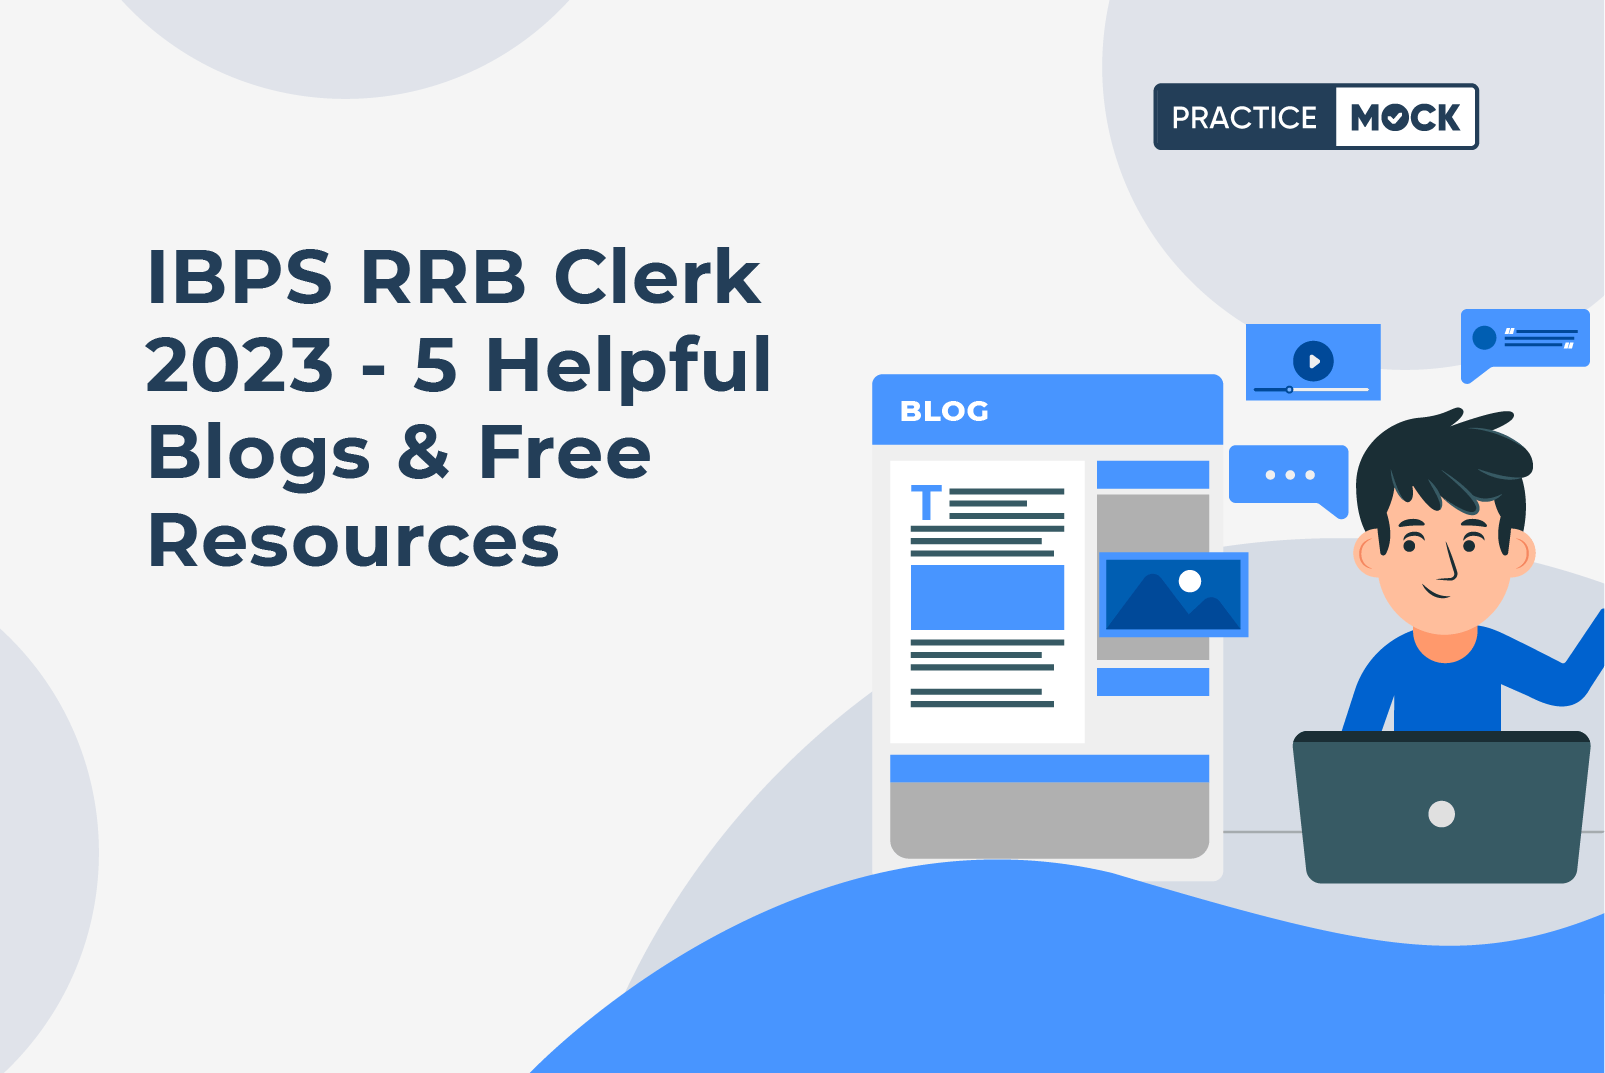 IBPS RRB Clerk 2023 - 5 Helpful Blogs & Free Resources